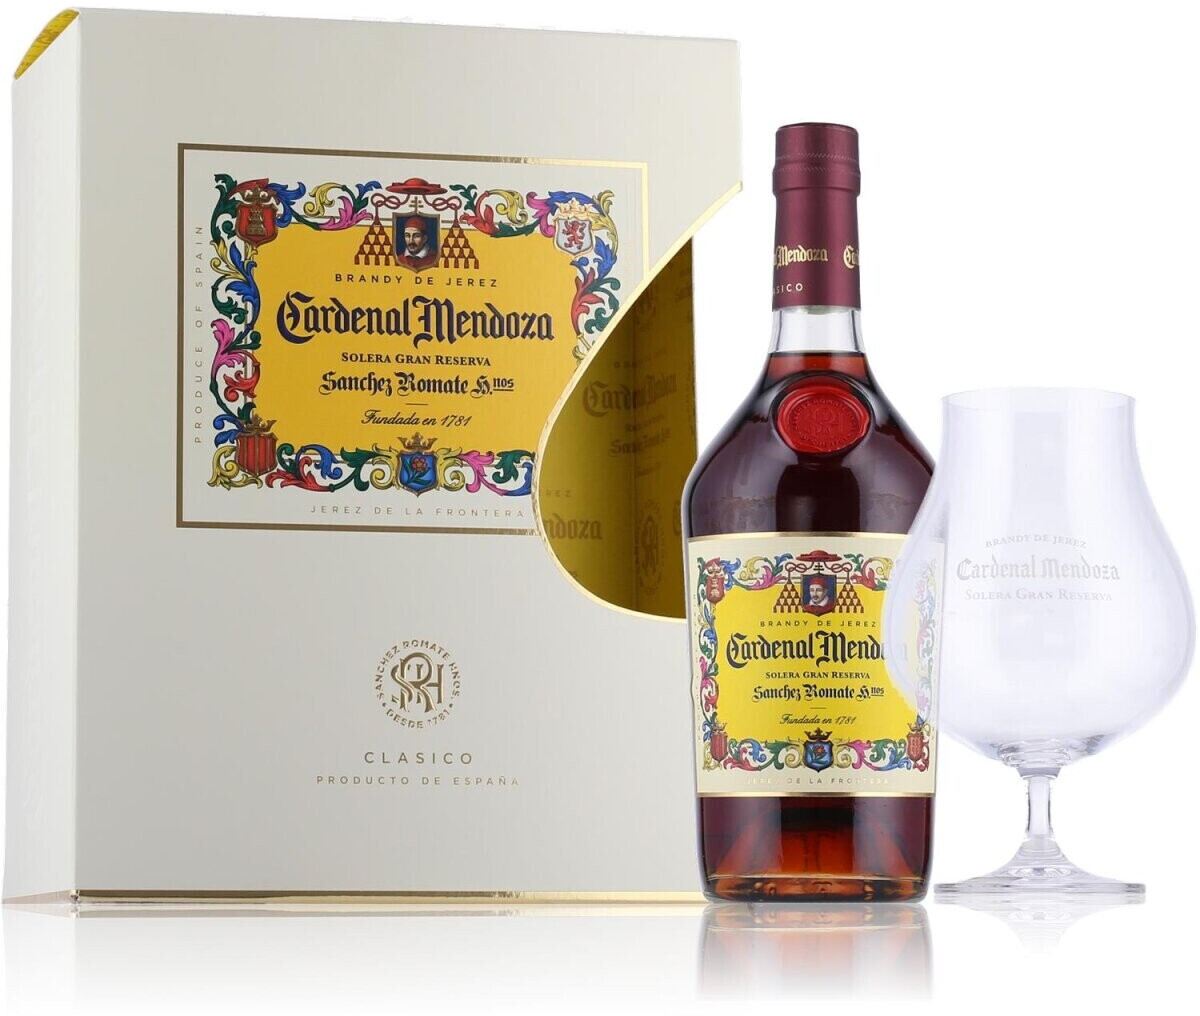 Cardenal Mendoza Brandy 0,7l 40% Gift Set with Glass ab 23,99 € |  Preisvergleich bei